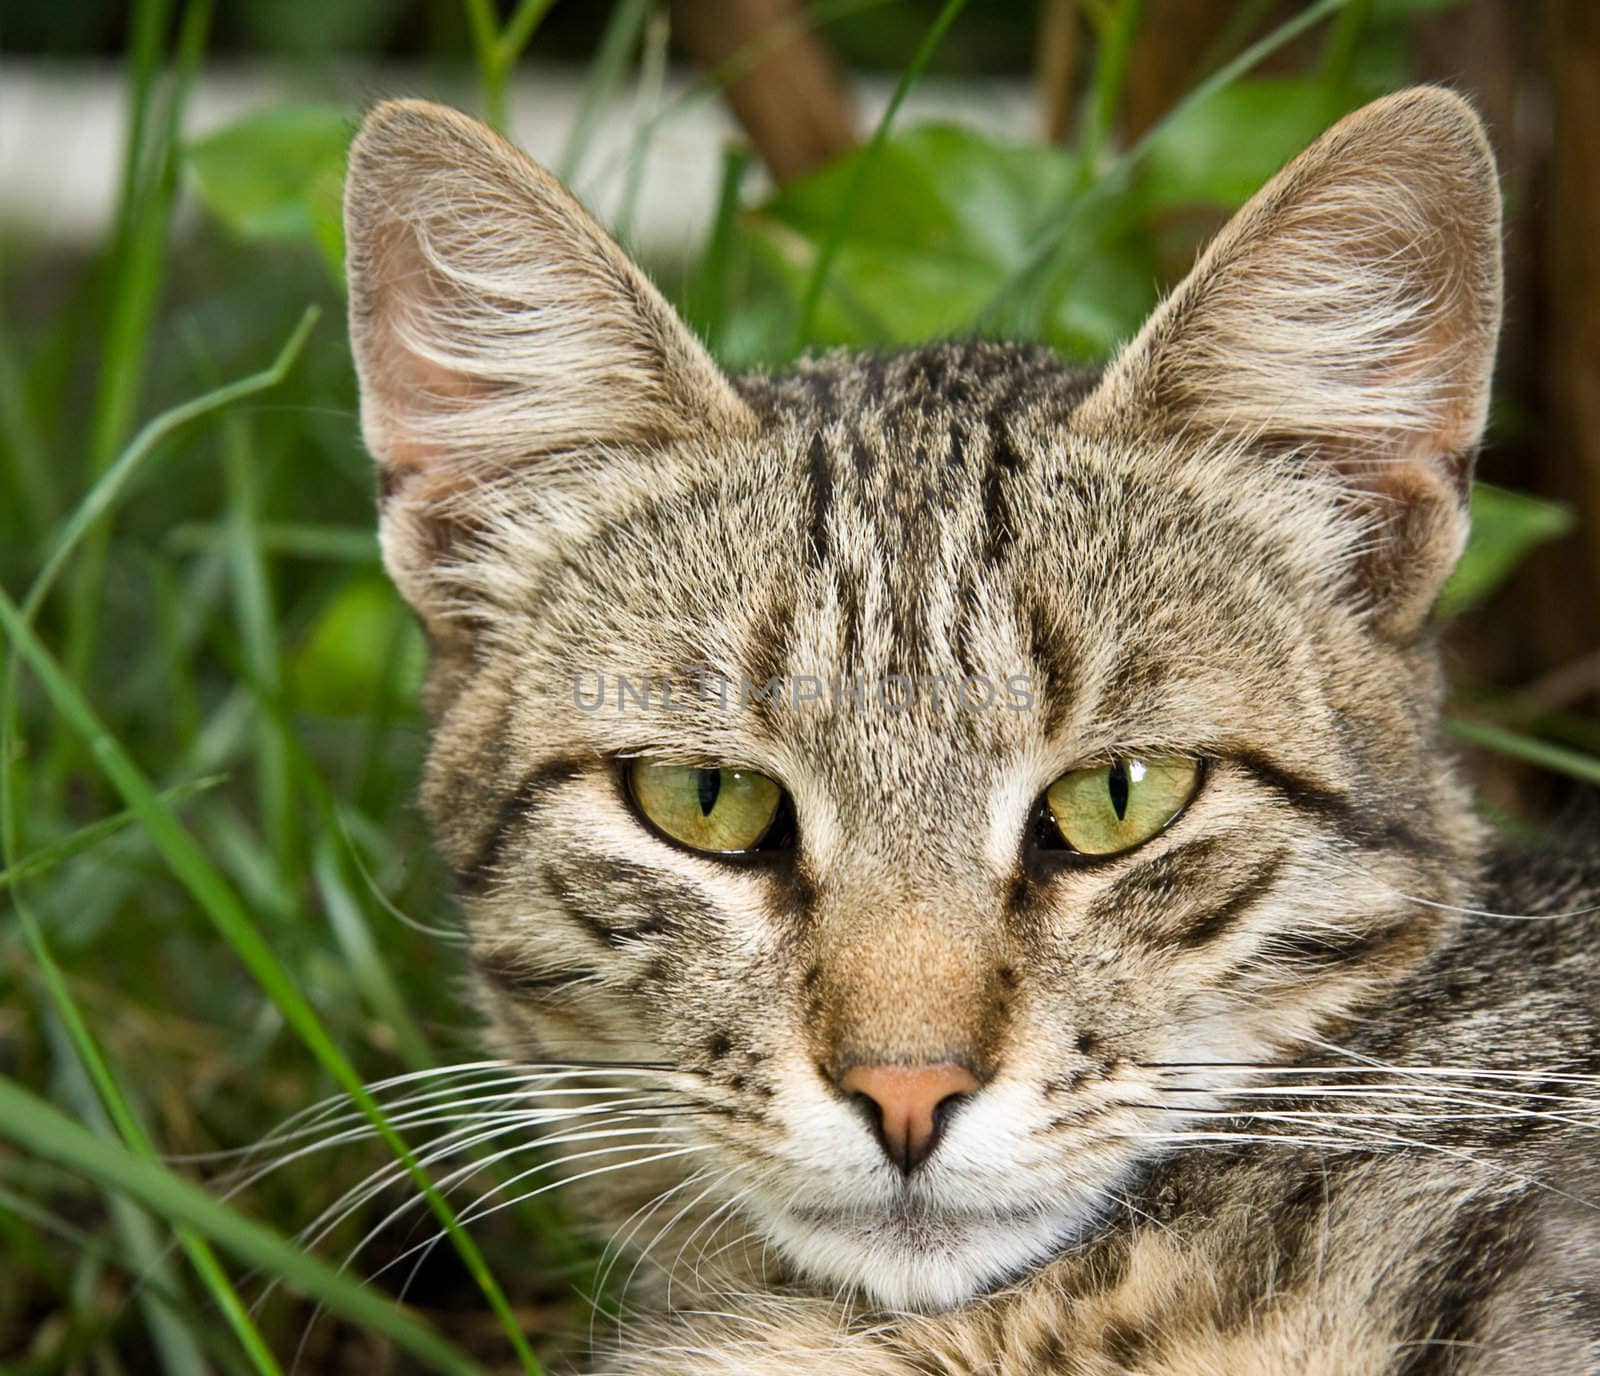 Striped cat close-up portrait